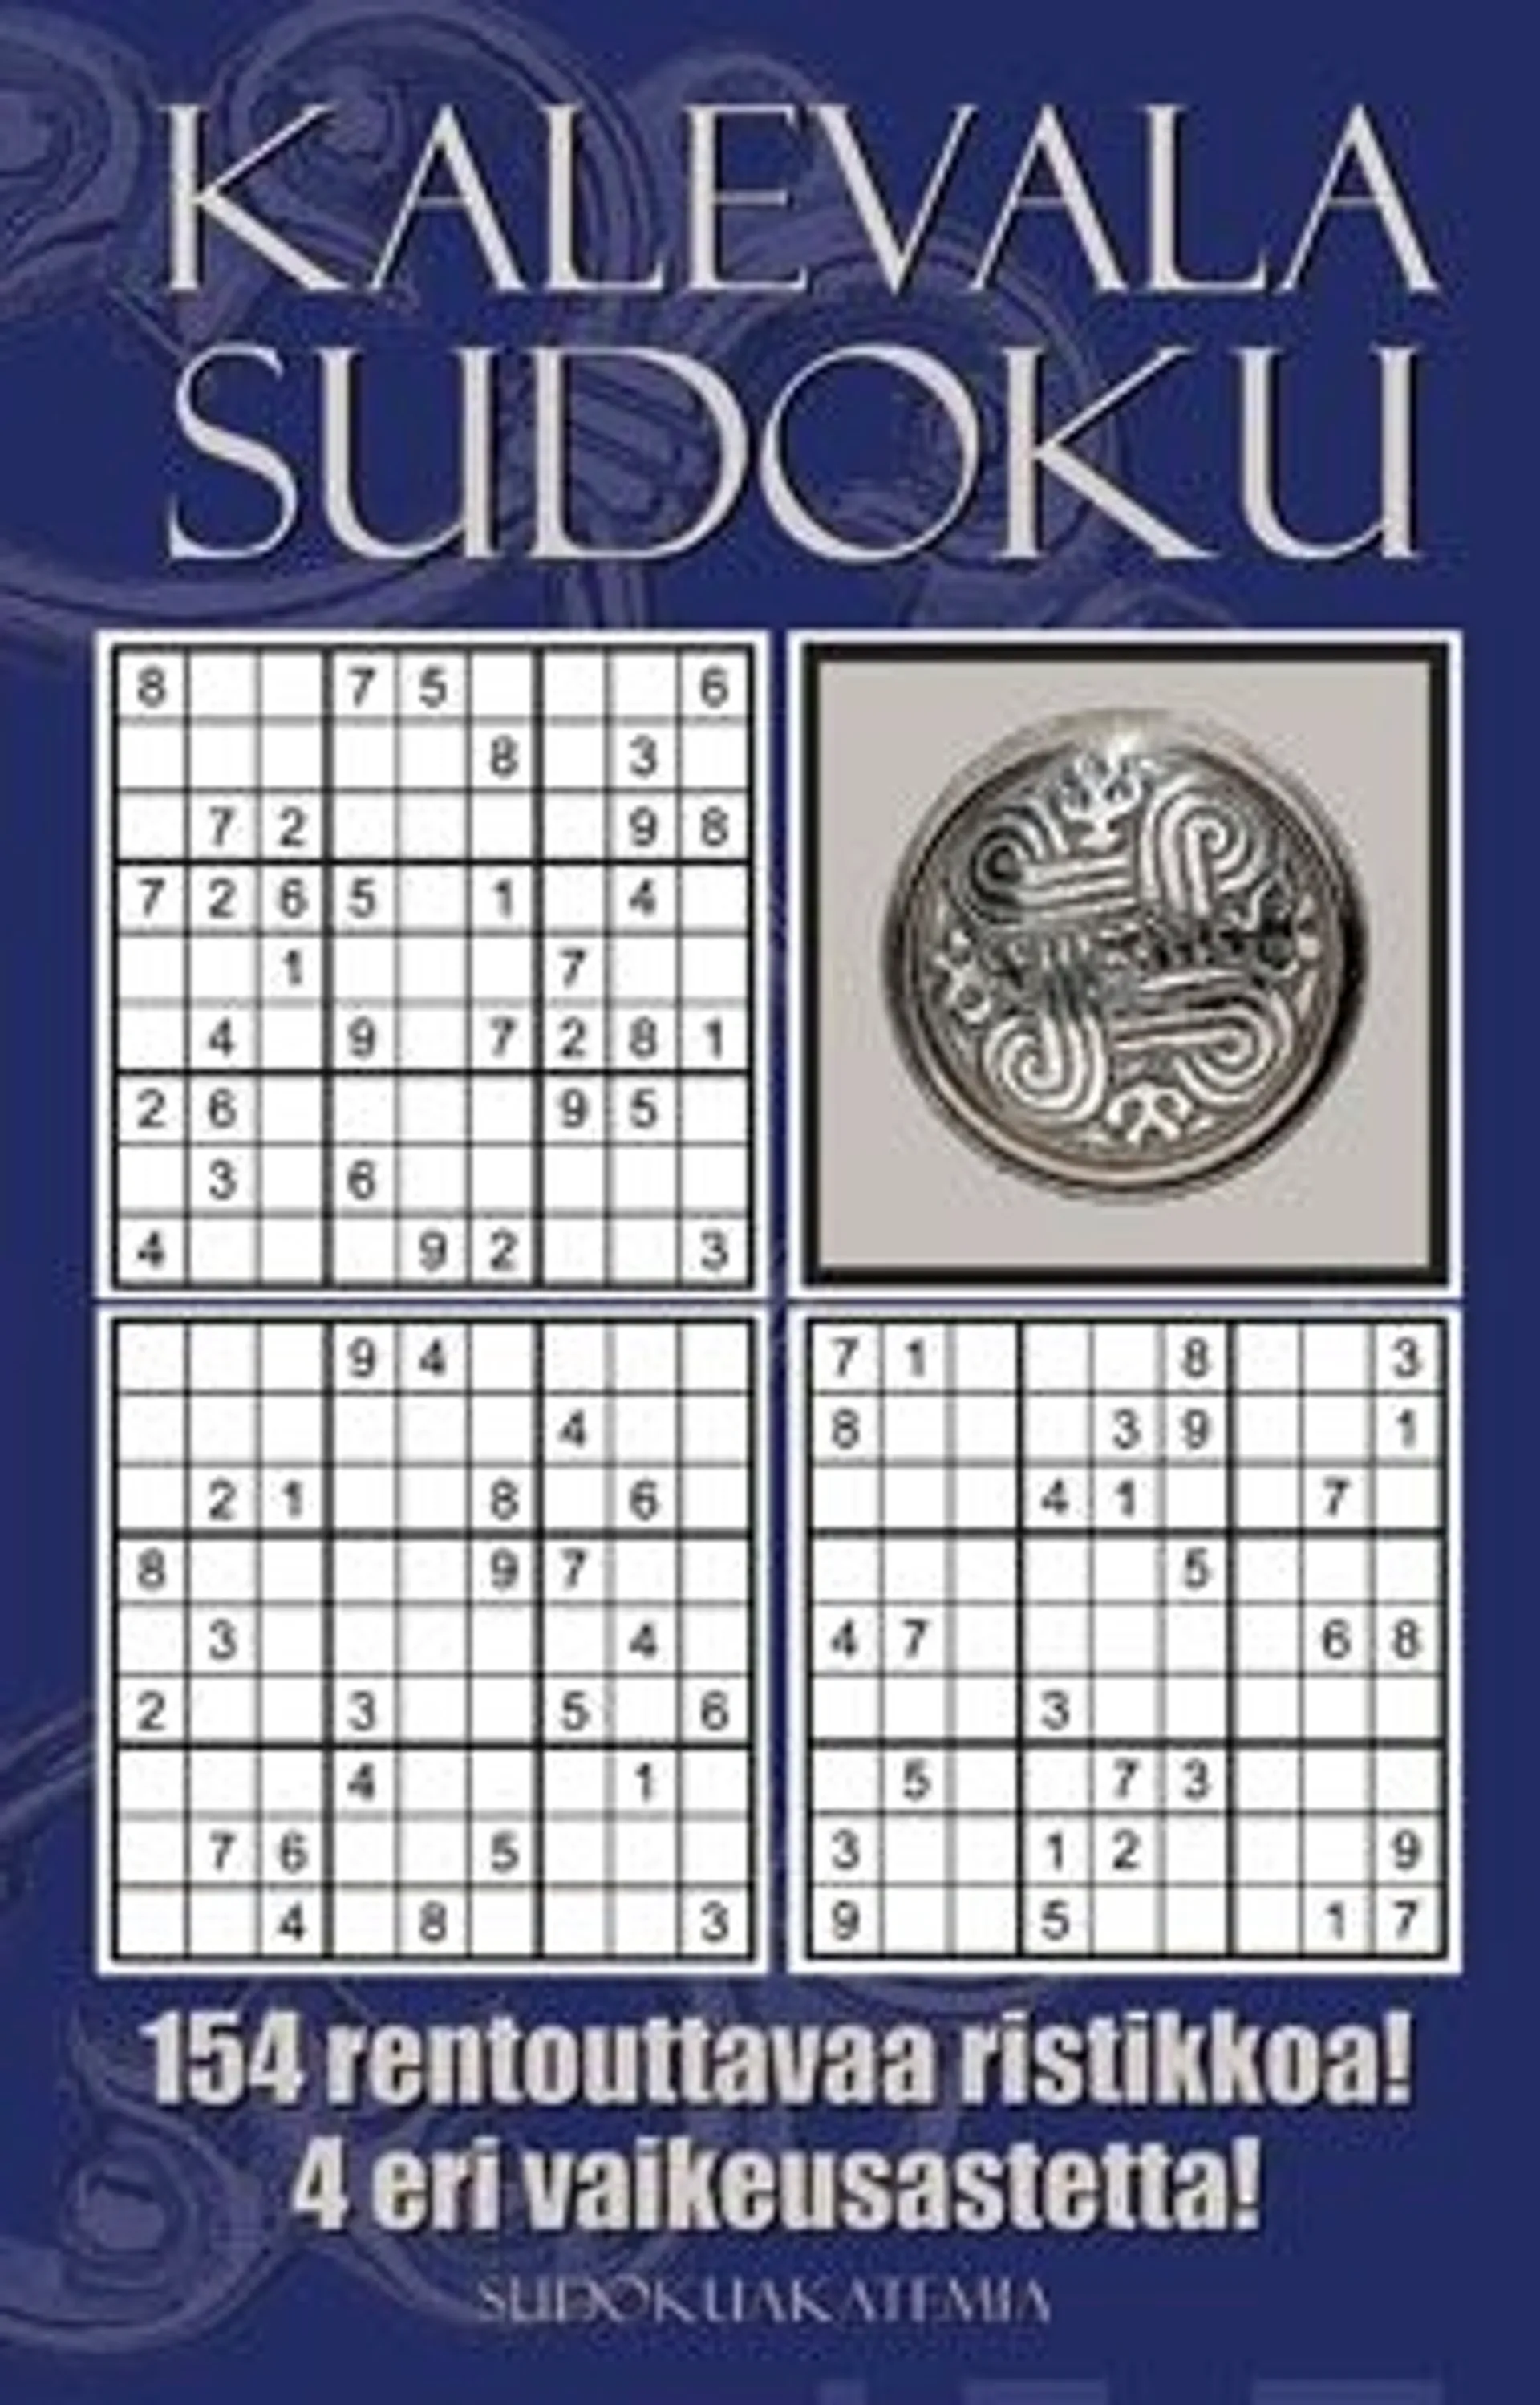 SudokuAkatemia, KalevalaSudoku